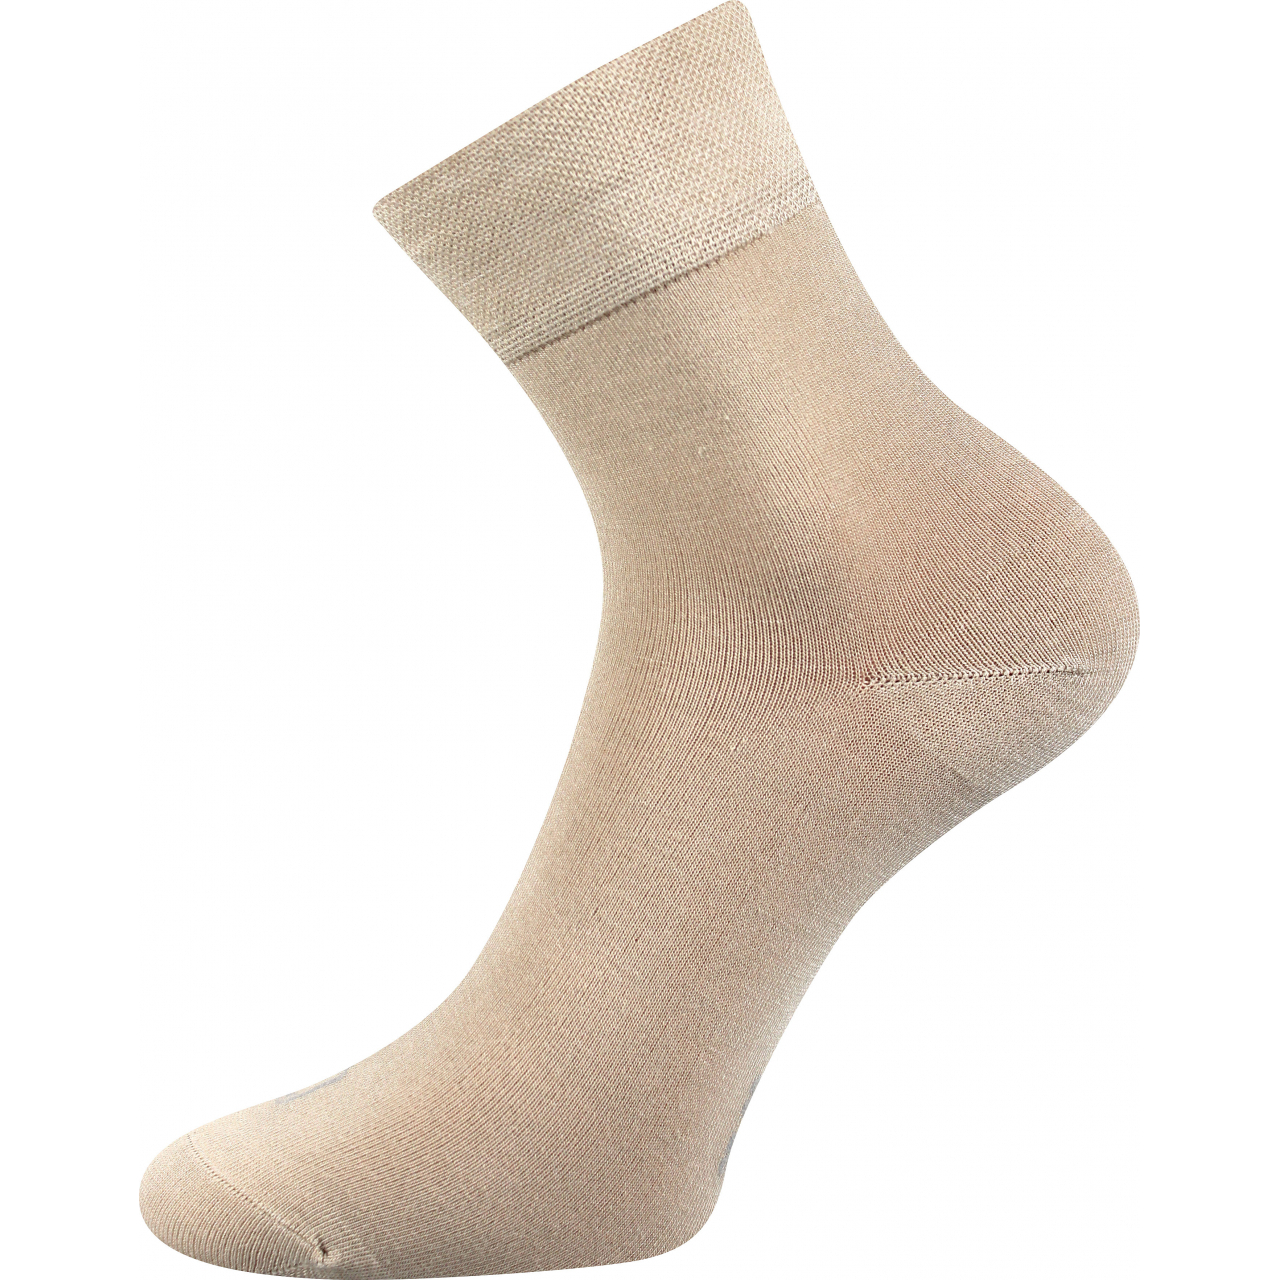 Ponožky unisex bambusové Lonka Demi - béžové, 35-38